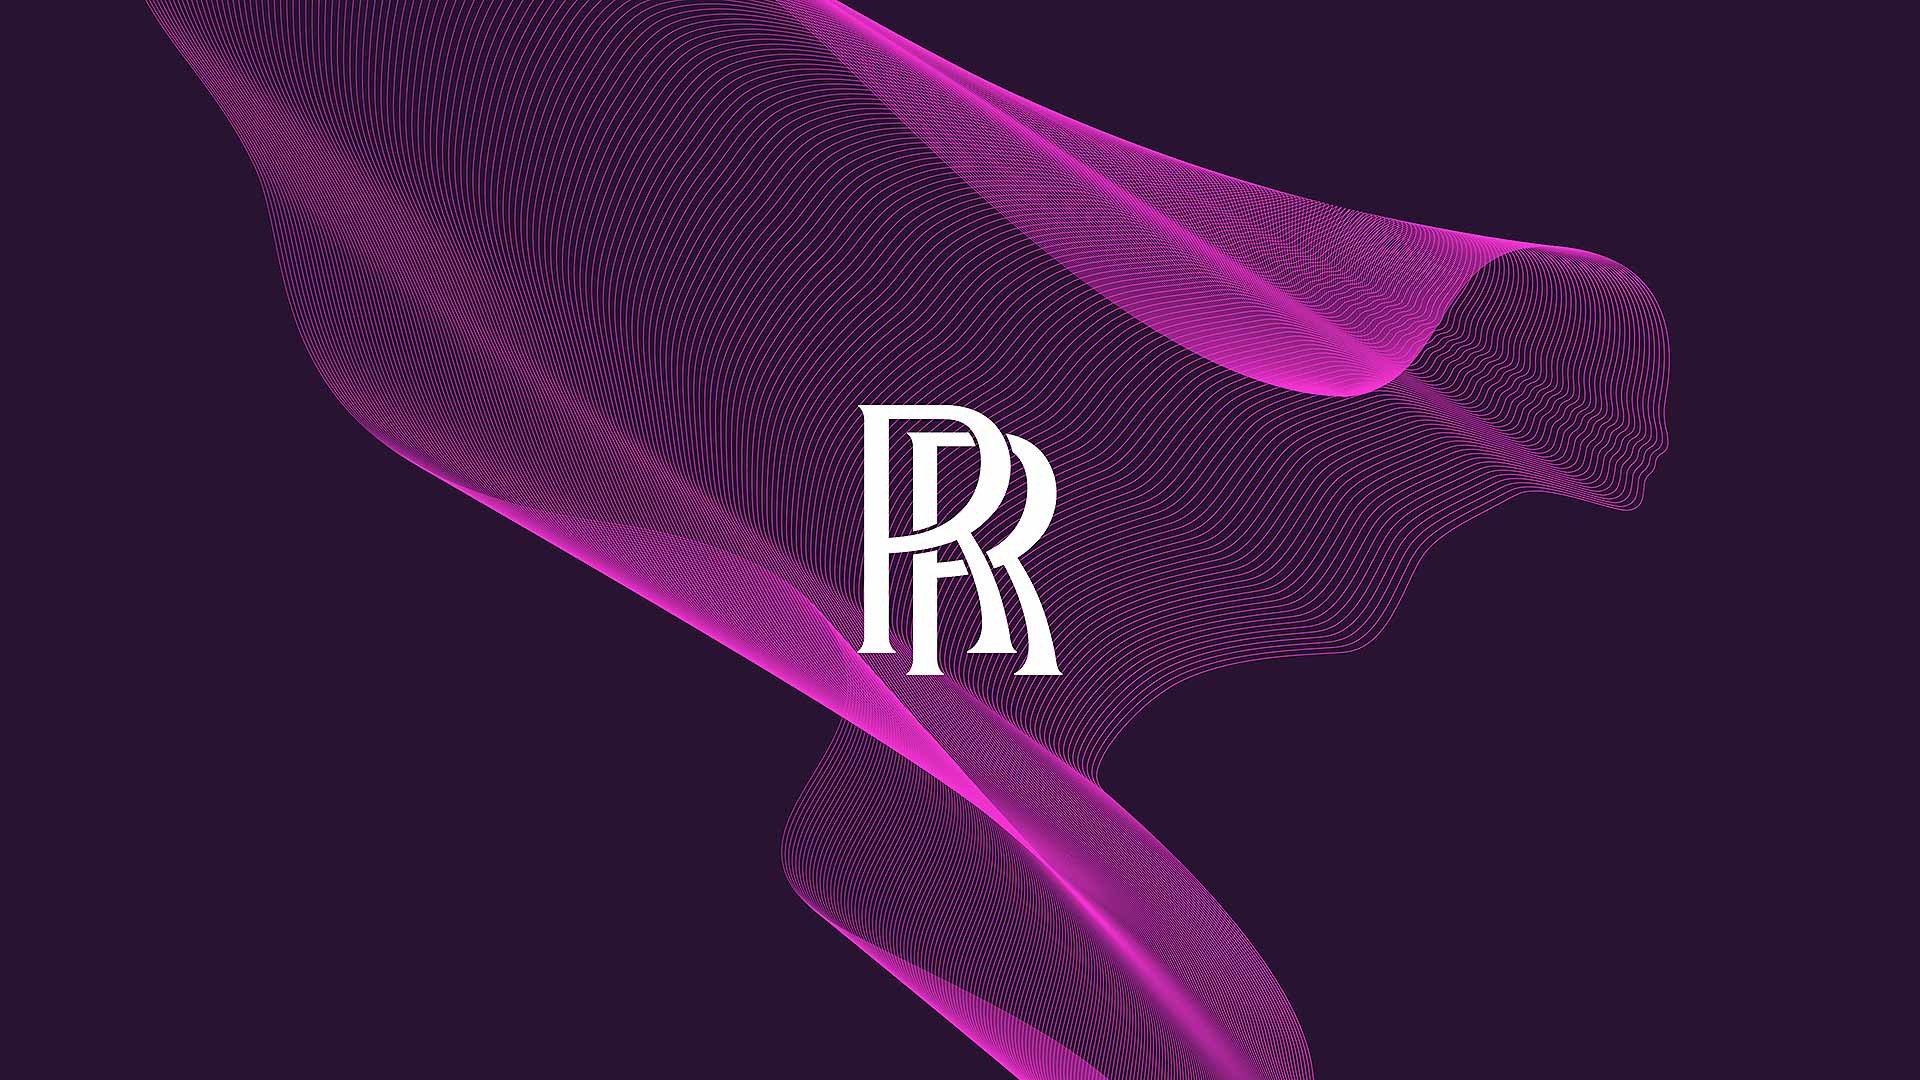 Rolls-Royce new brand identity